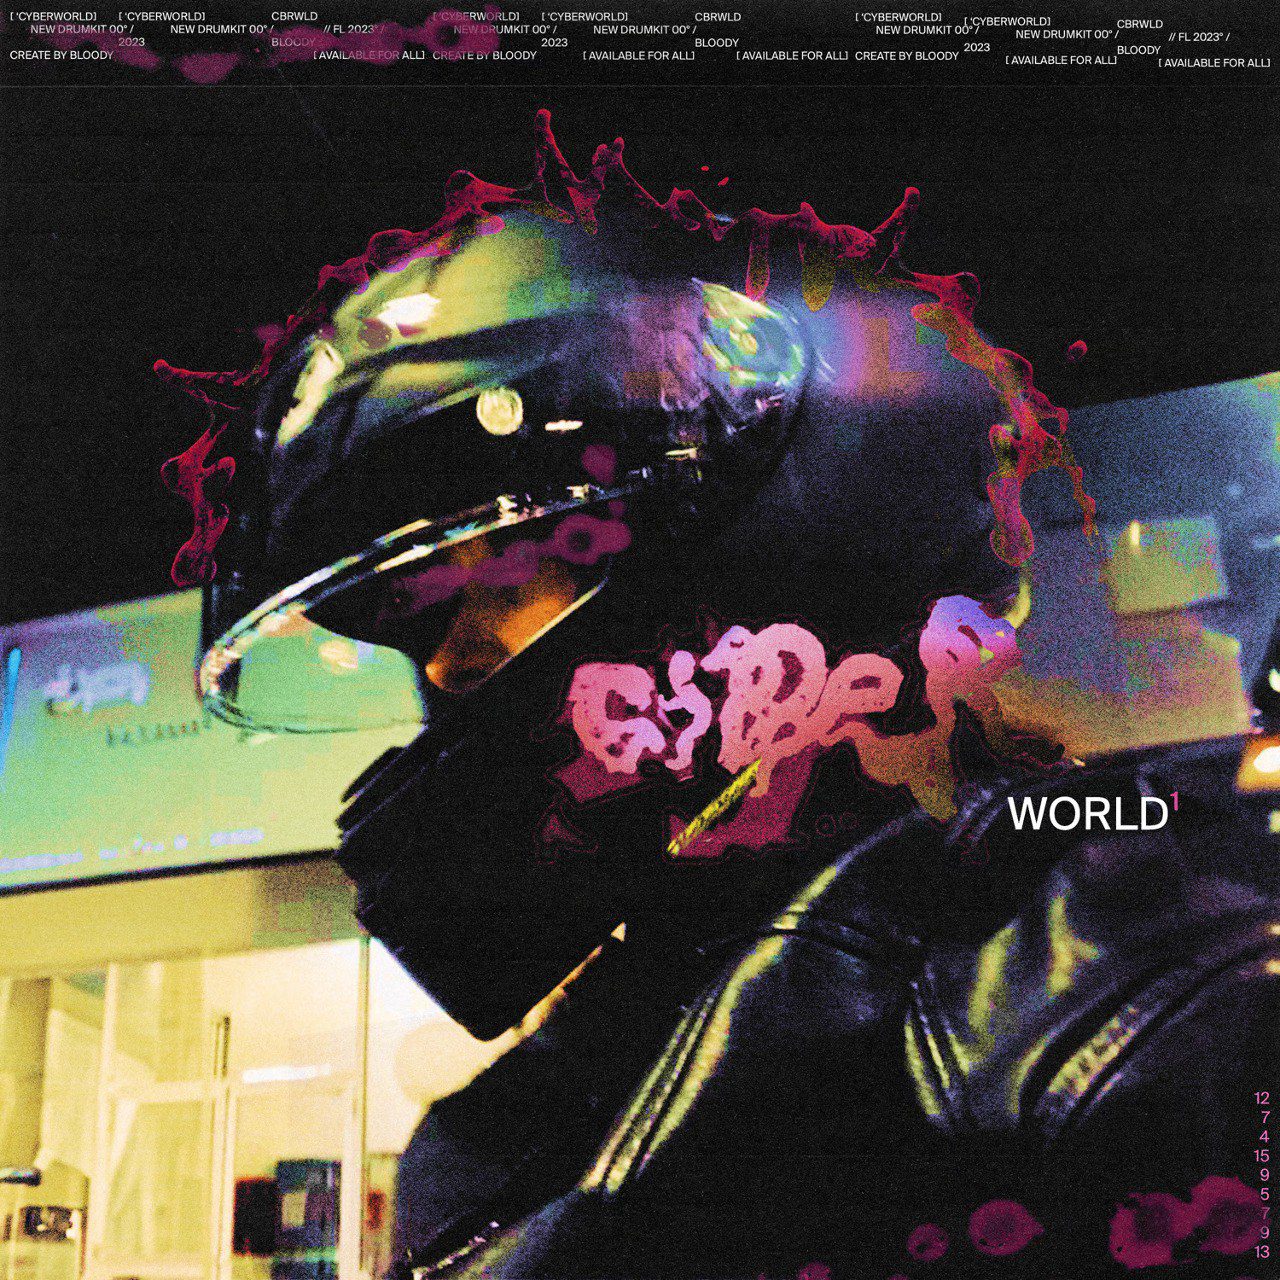 Bloody - Cyberworld Drum Kit Free Download